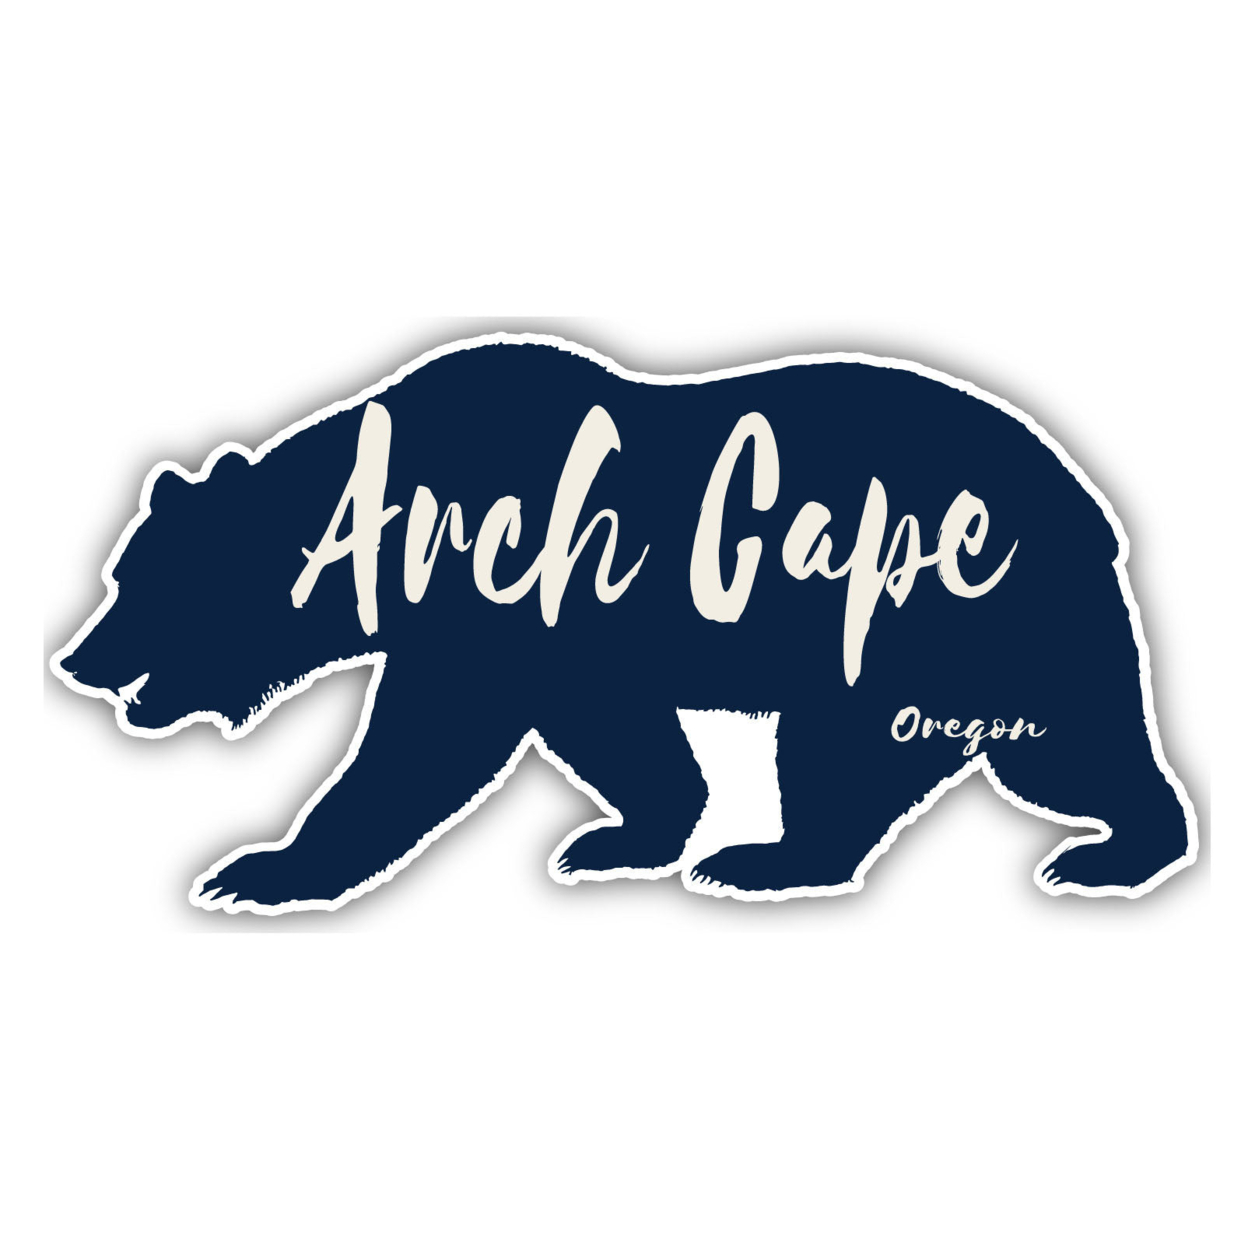 Arch Cape Oregon Souvenir Decorative Stickers (Choose Theme And Size) - 4-Pack, 8-Inch, Bear